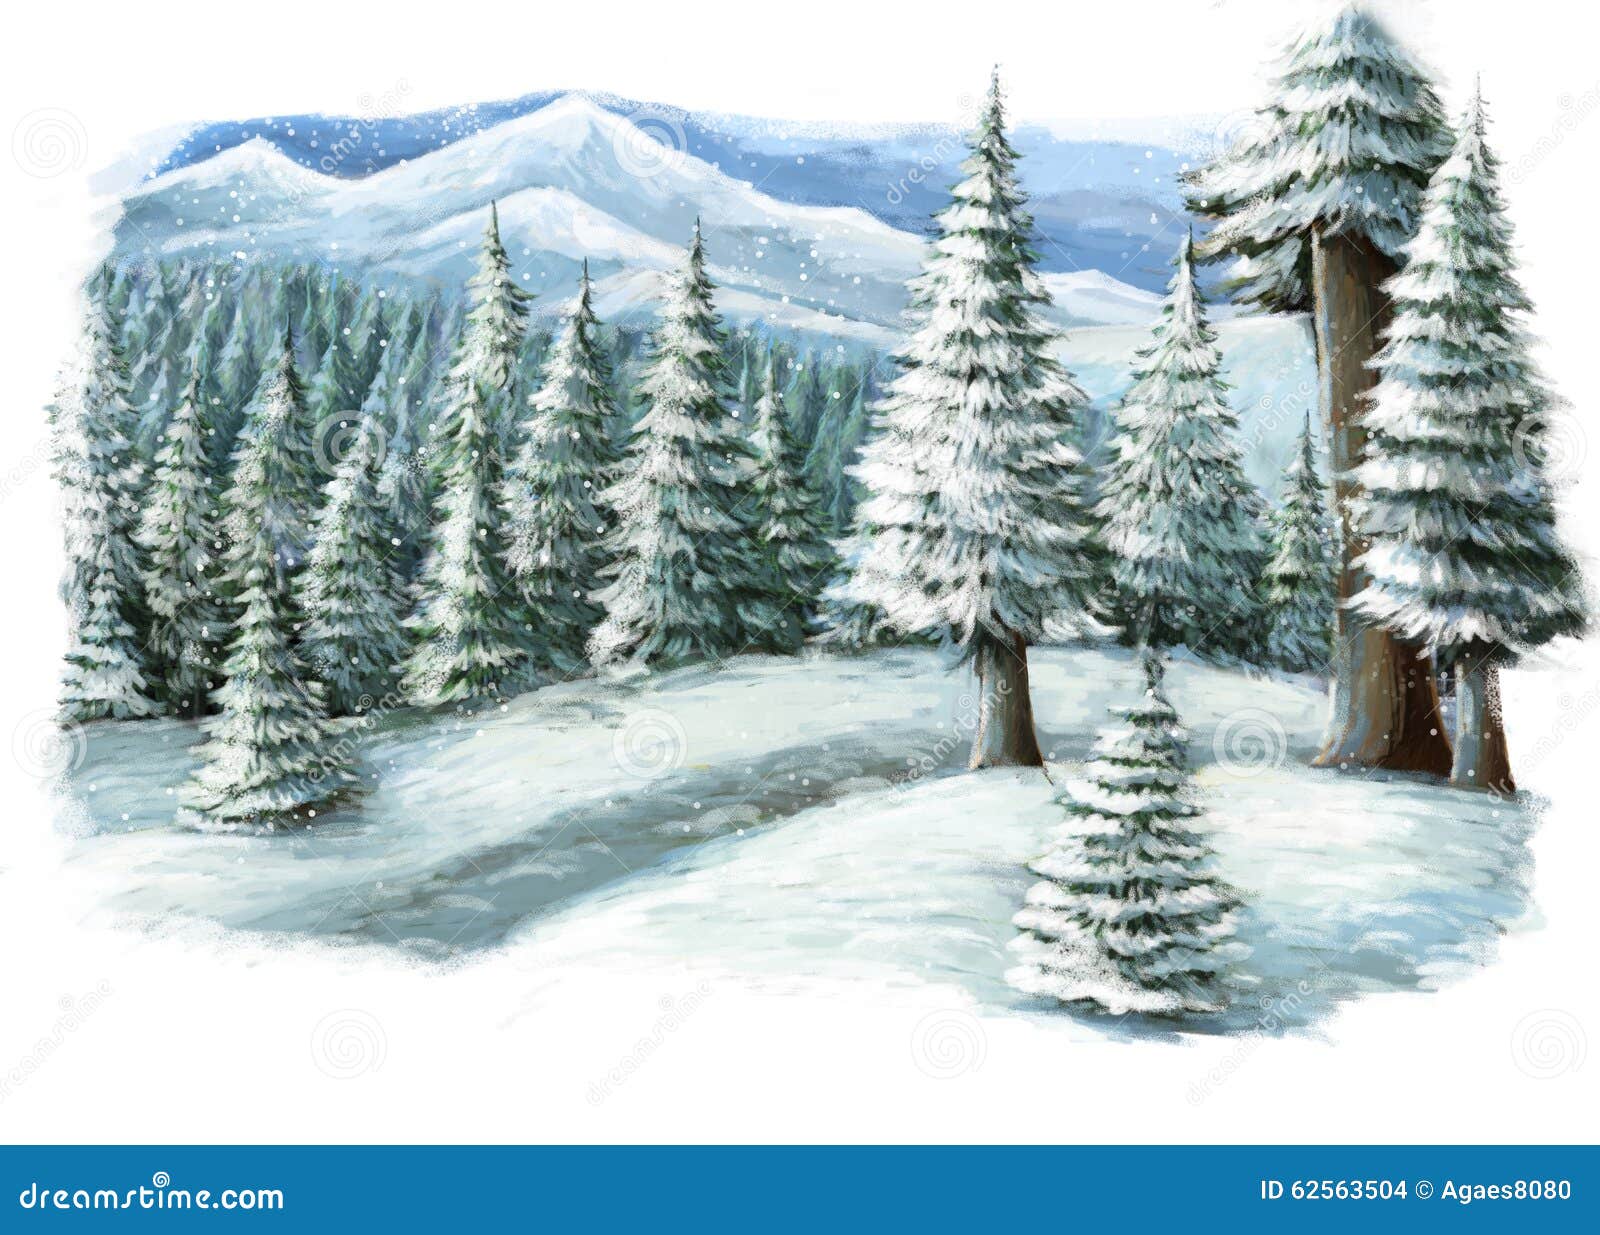 Cartoon Happy Winter Scene In The Mountains Stock Illustration - Image